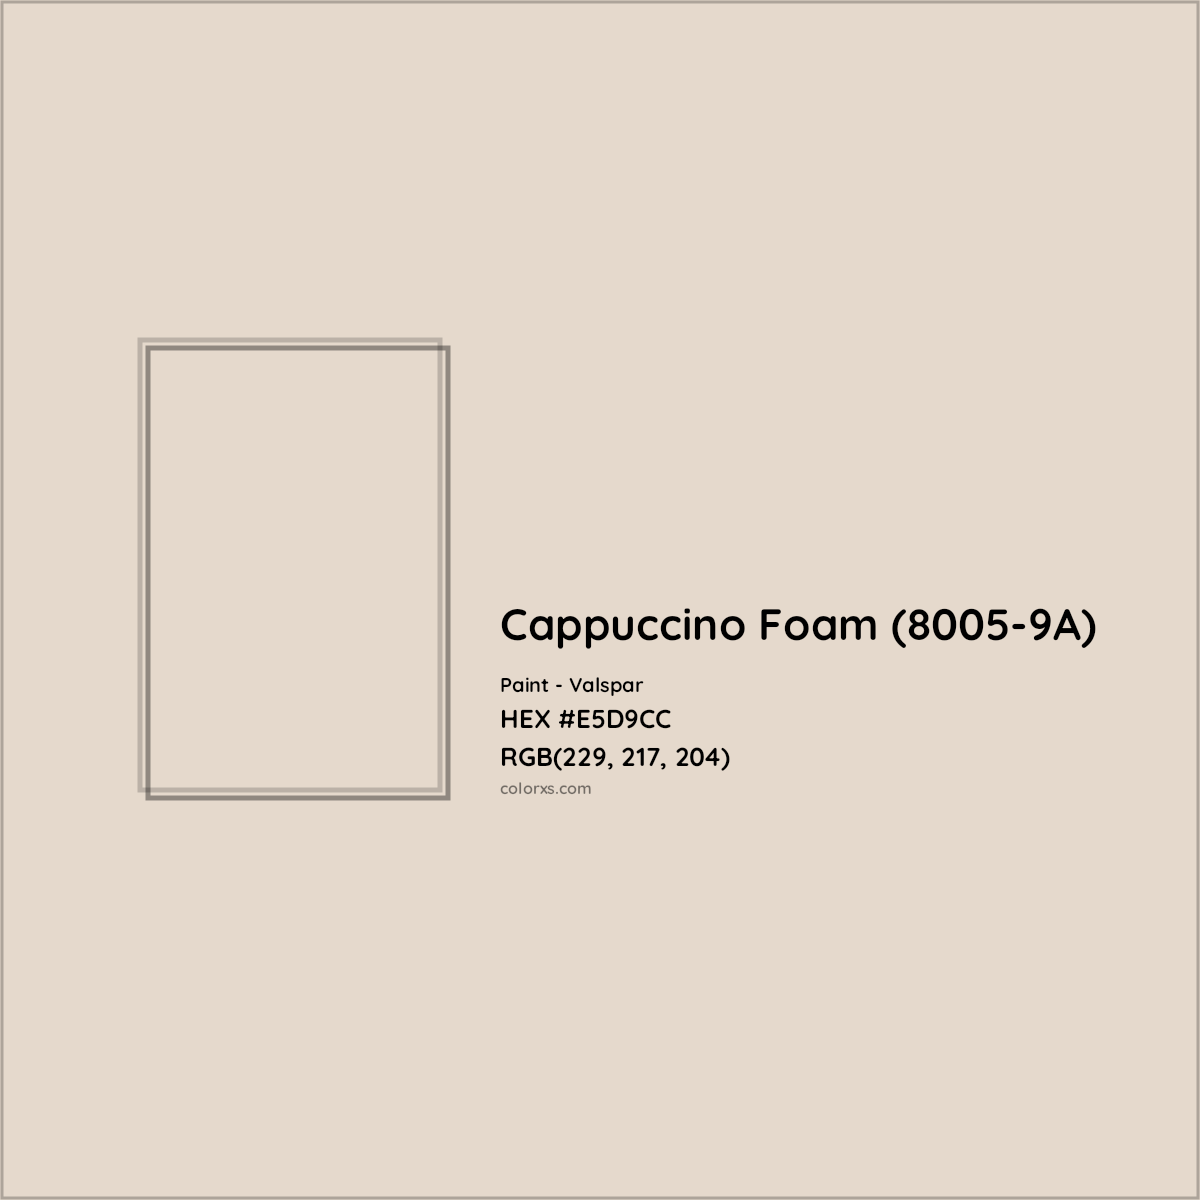 HEX #E5D9CC Cappuccino Foam (8005-9A) Paint Valspar - Color Code